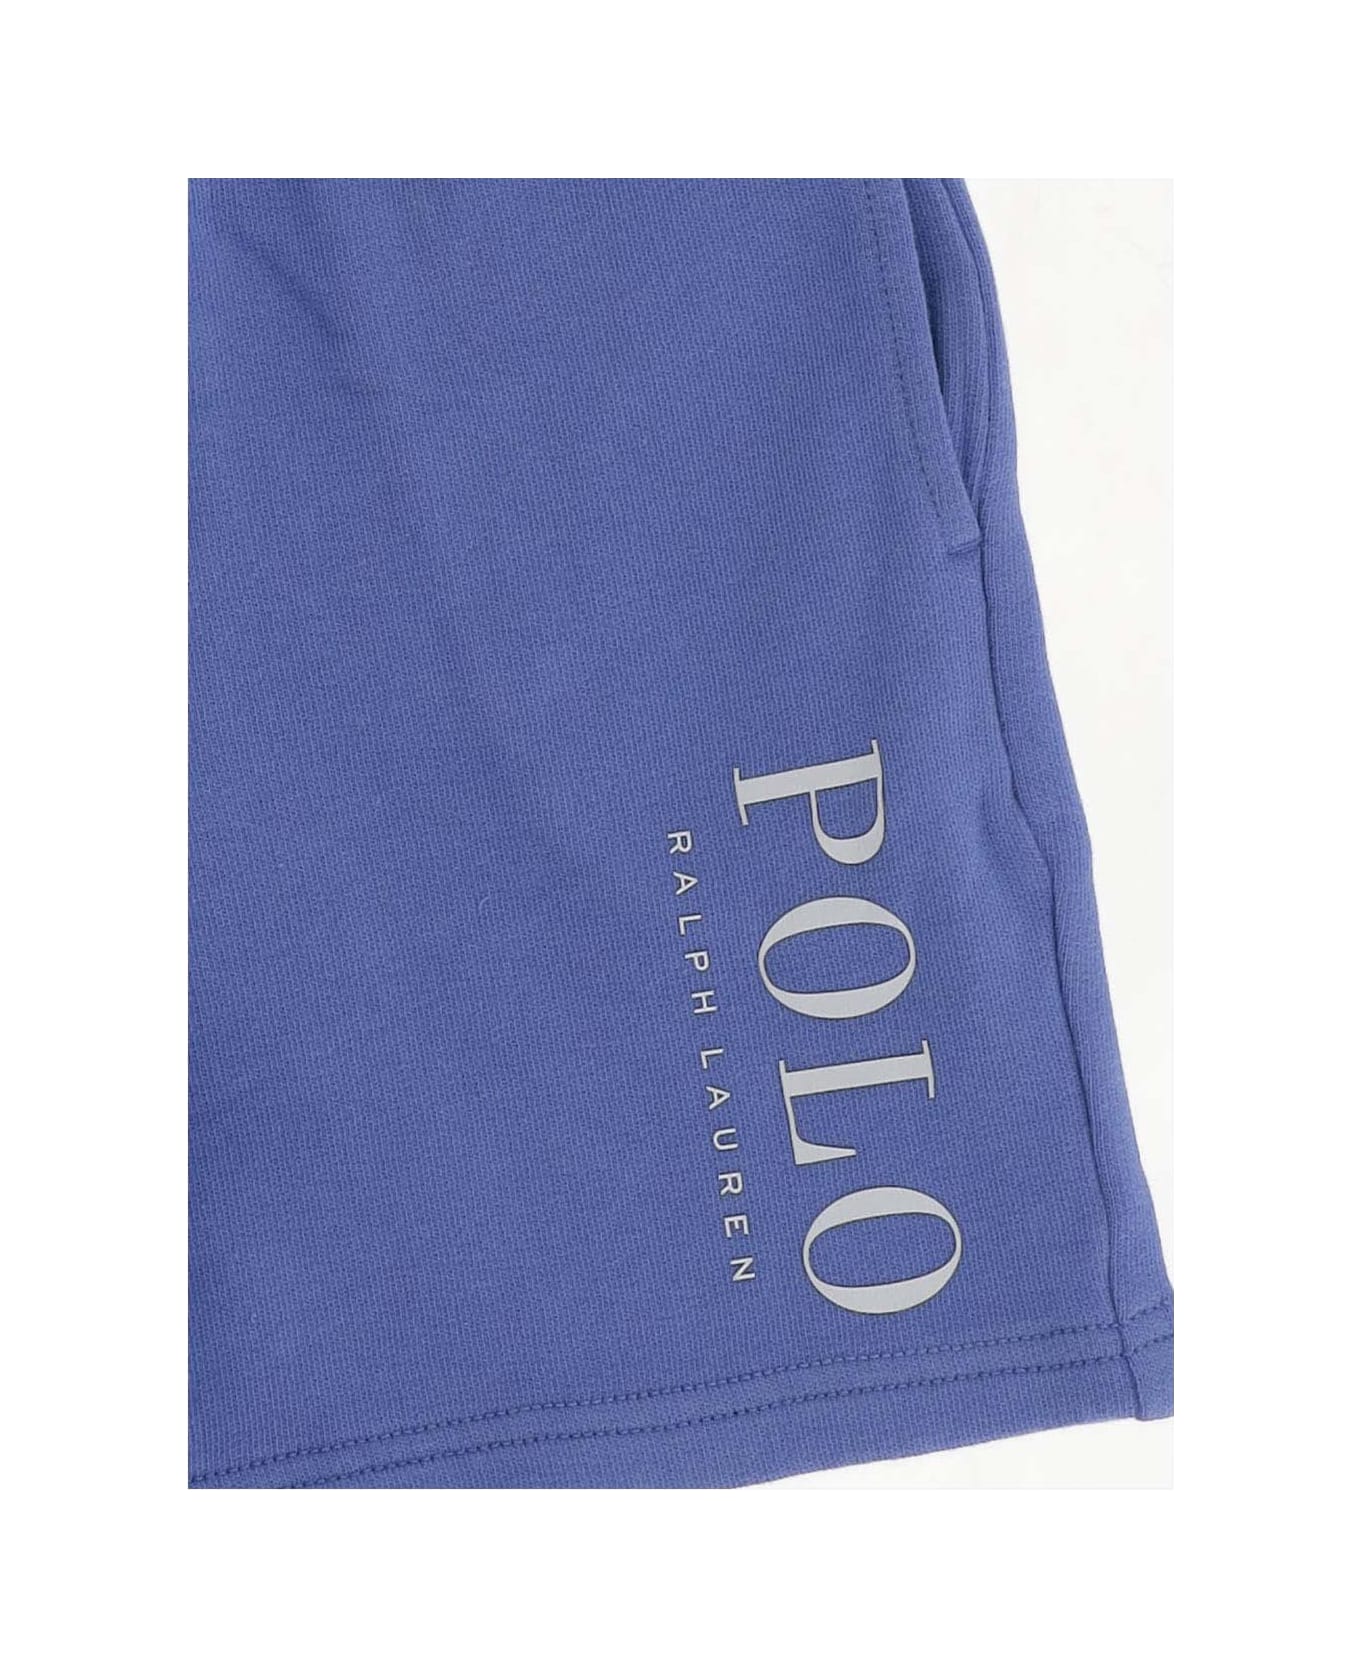 Polo Ralph Lauren Cotton Blend Logo Short Pants - Blue ボトムス